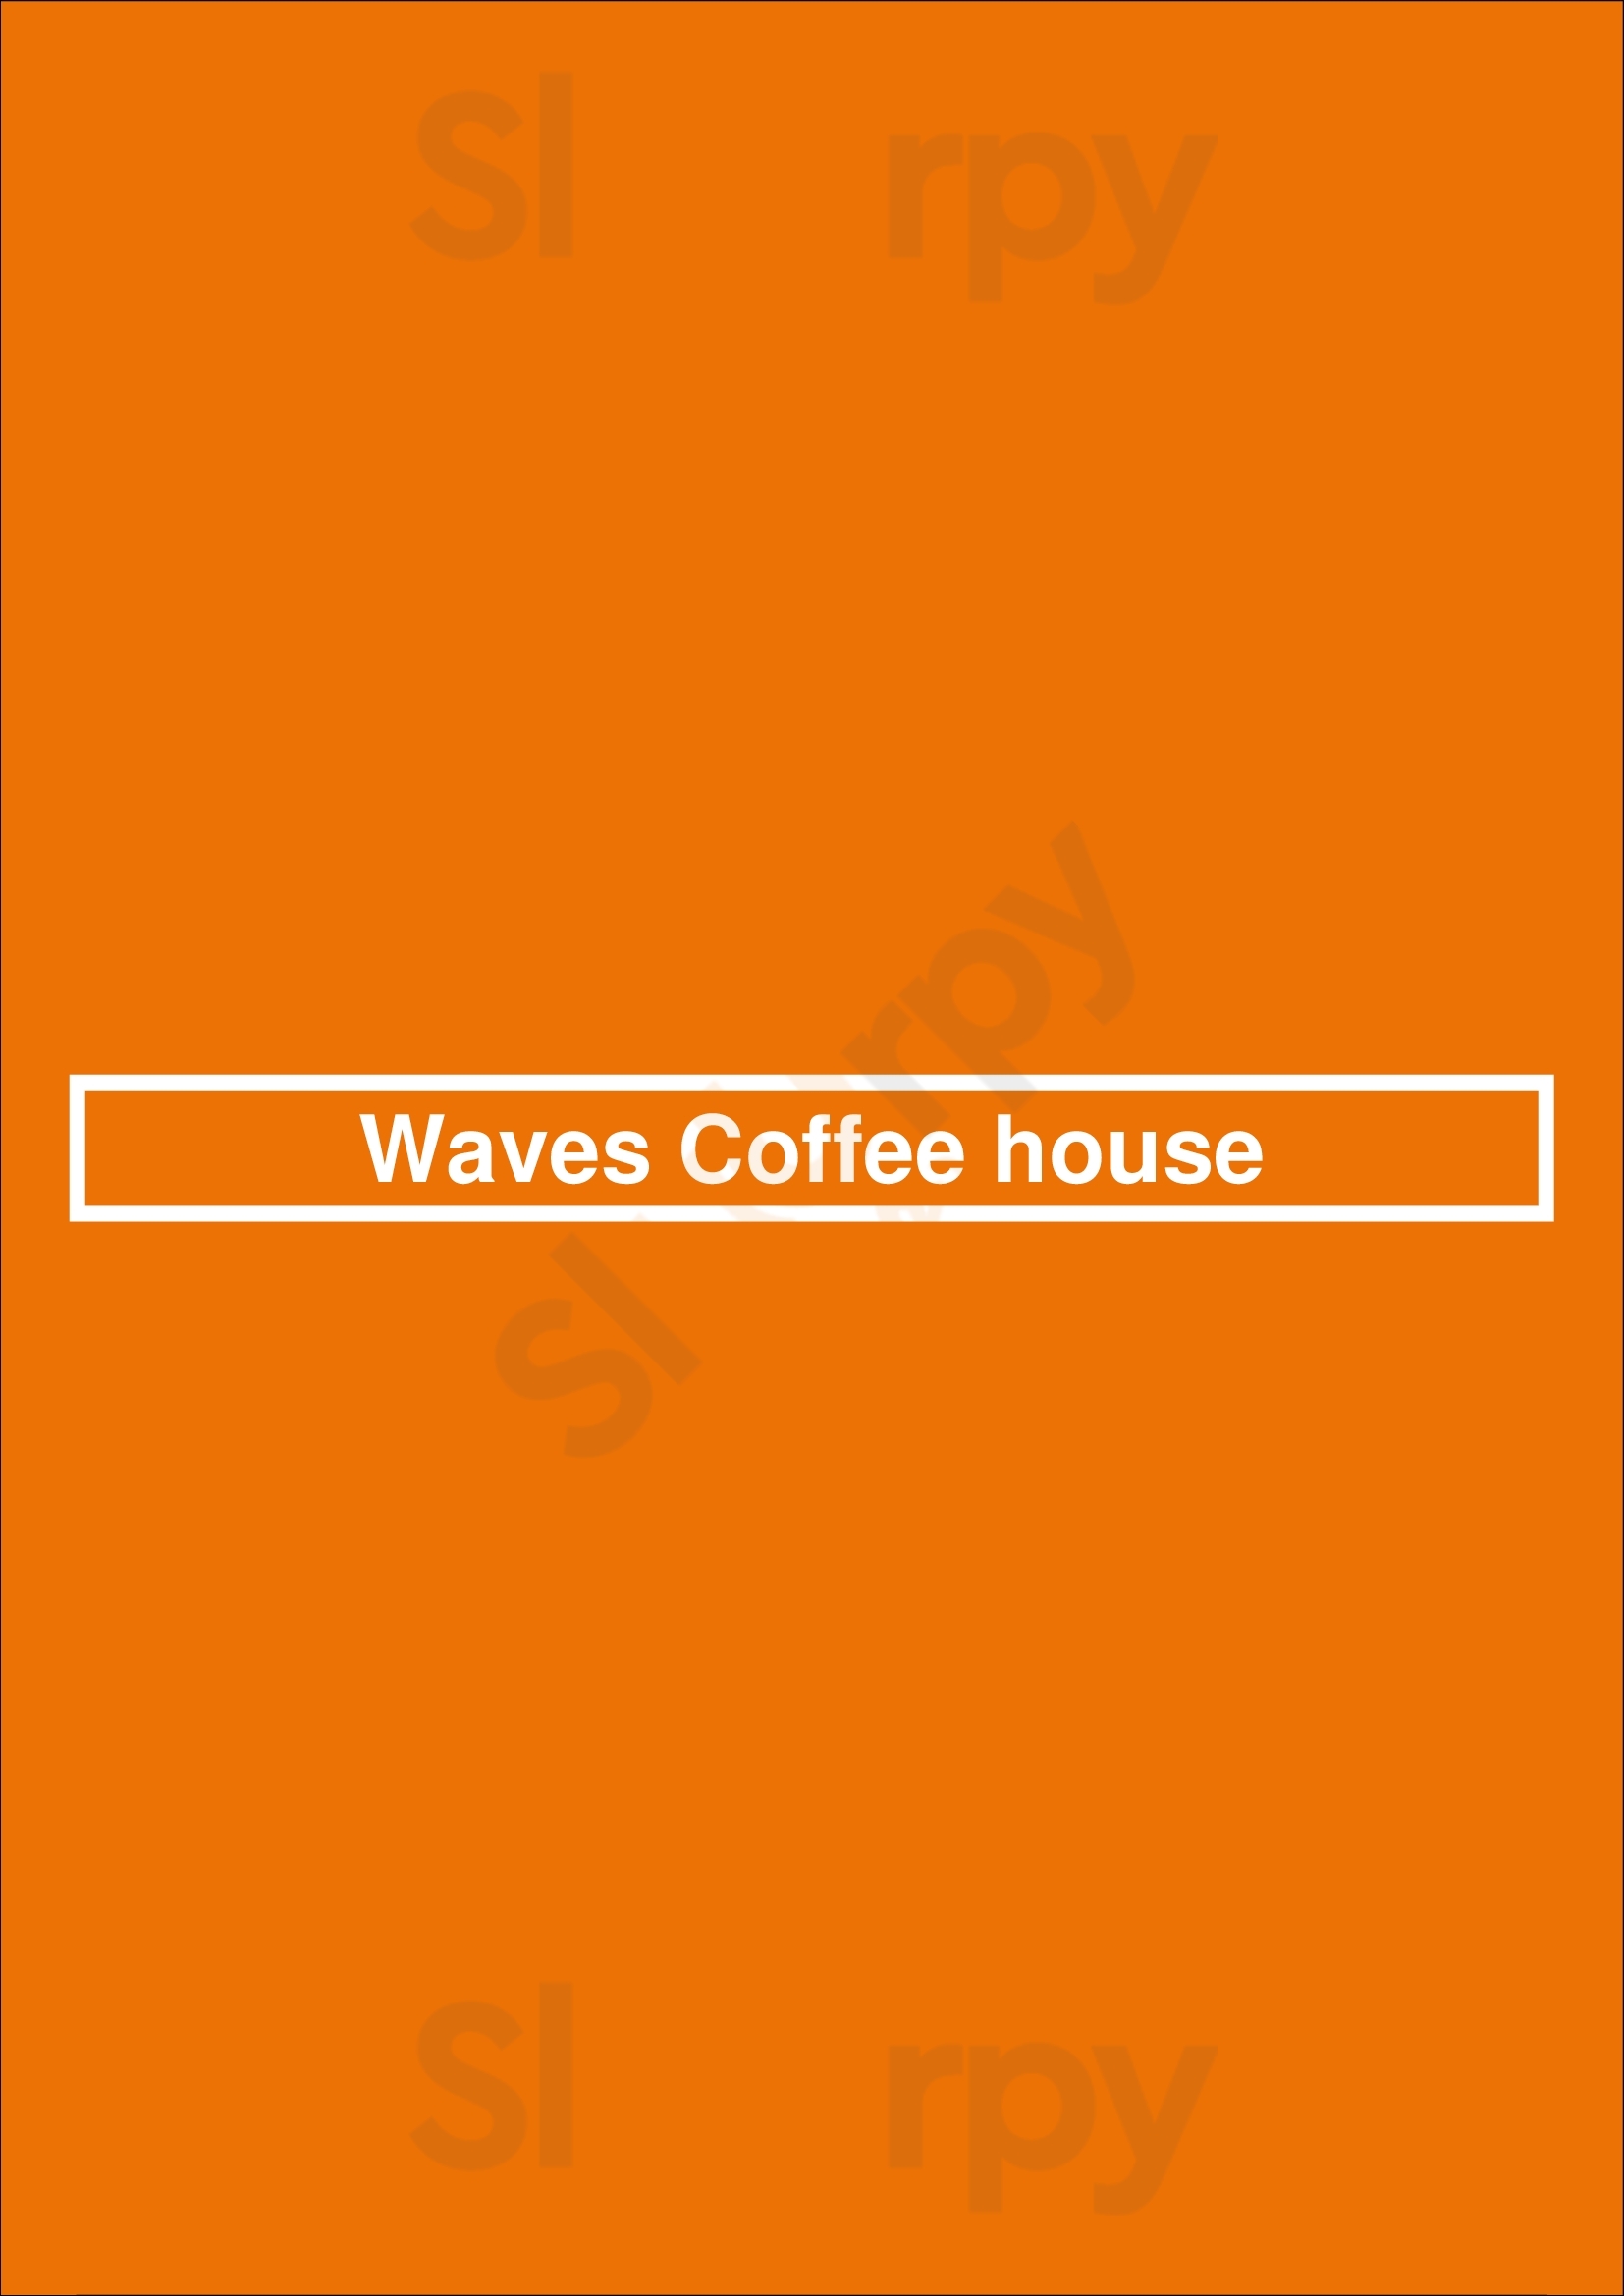 Waves Coffee House Vancouver Menu - 1